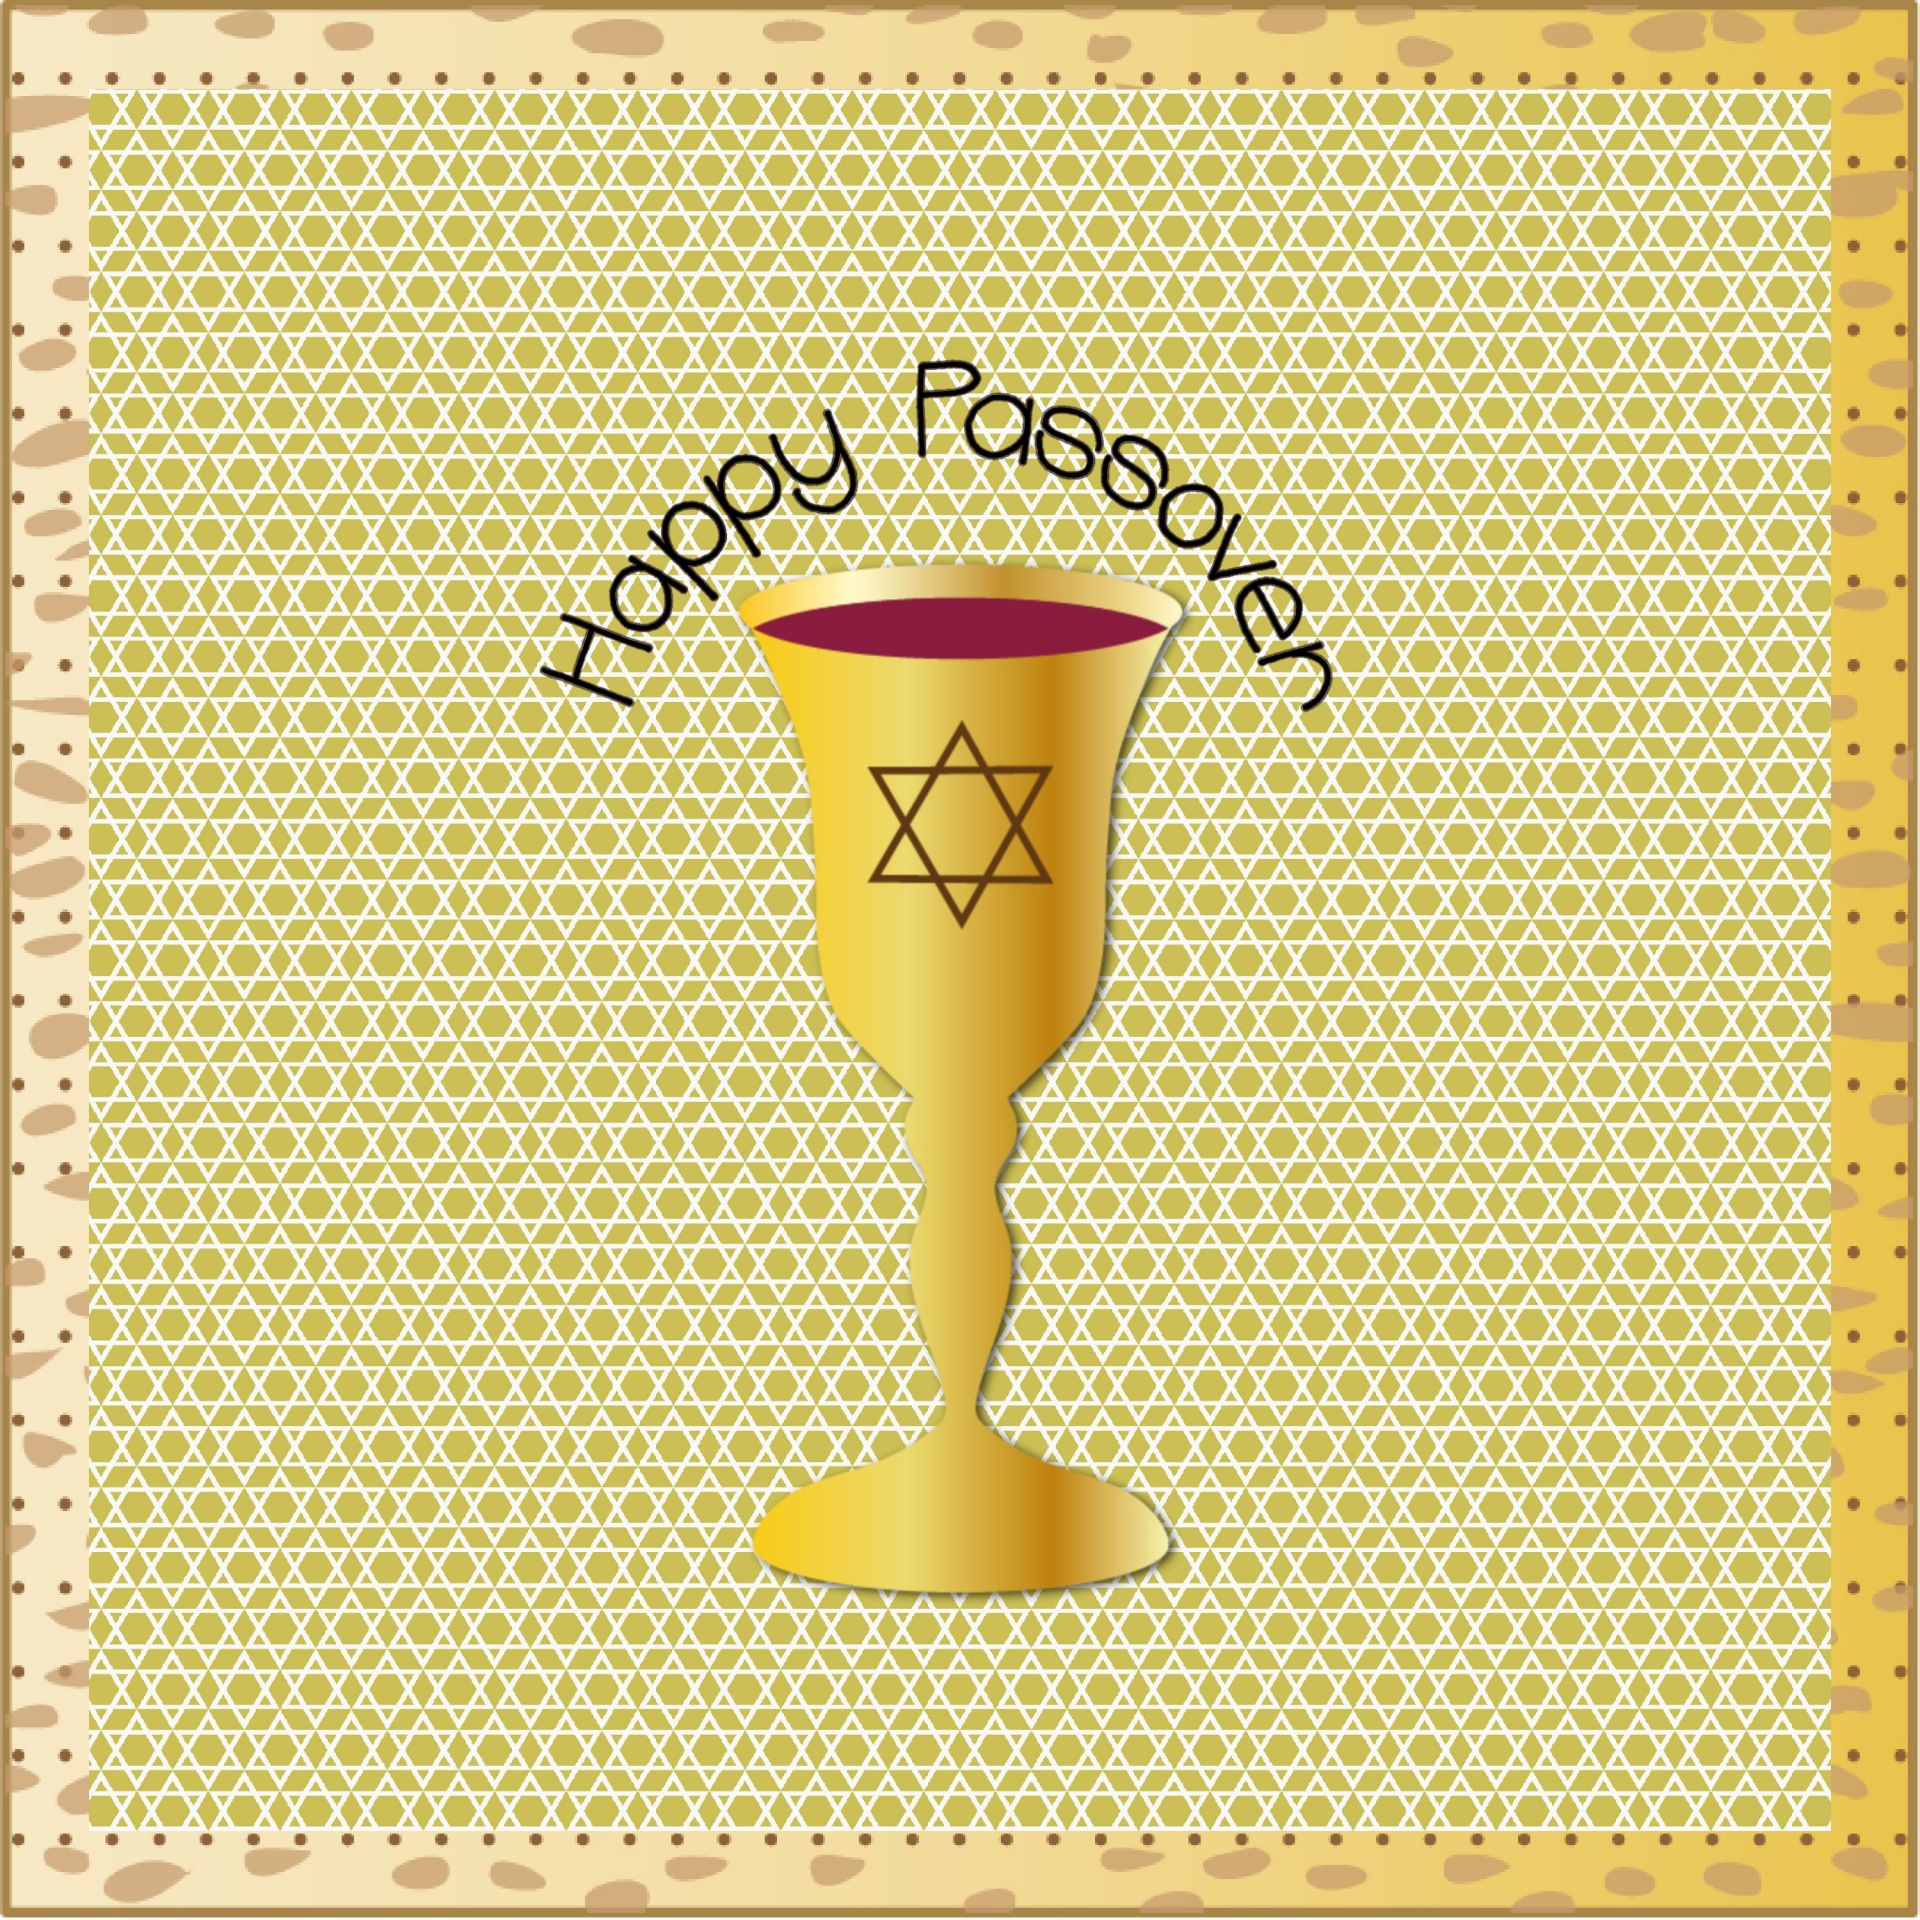 Jewish illustration with golden goblet of wine